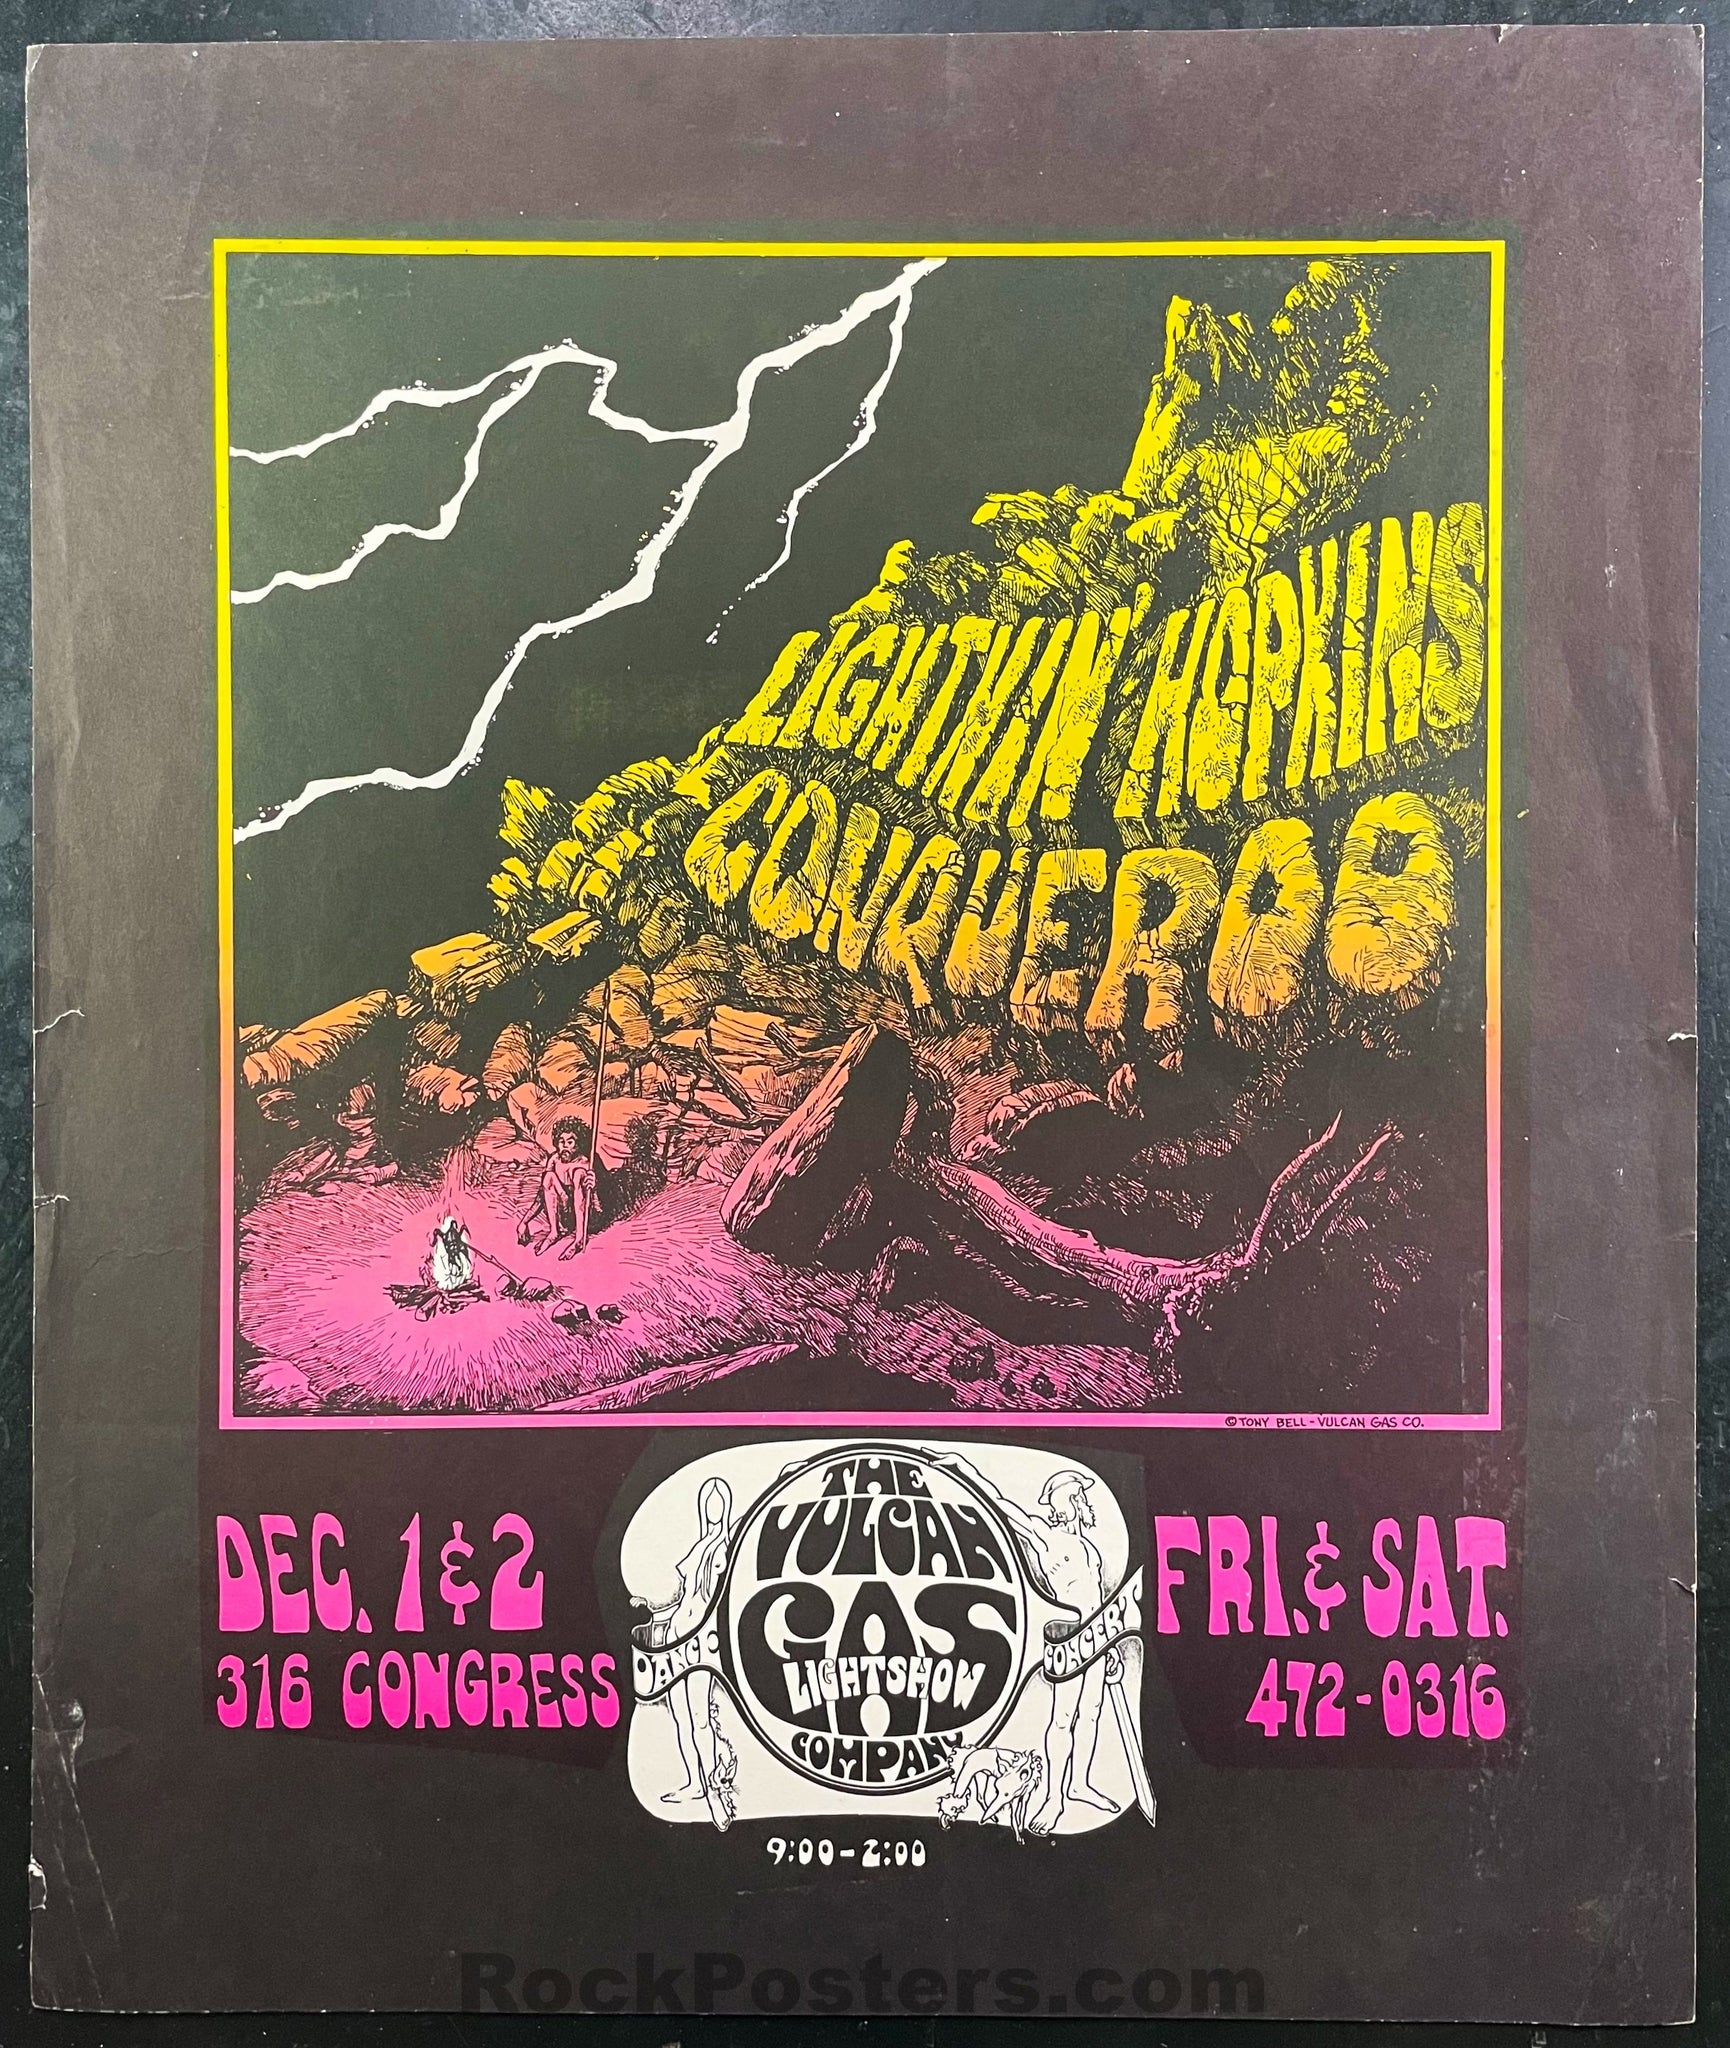 AUCTION - Vulcan Gas - Lightnin' Hopkins Conqueroo - Tony Bell - 1967 Poster - Good